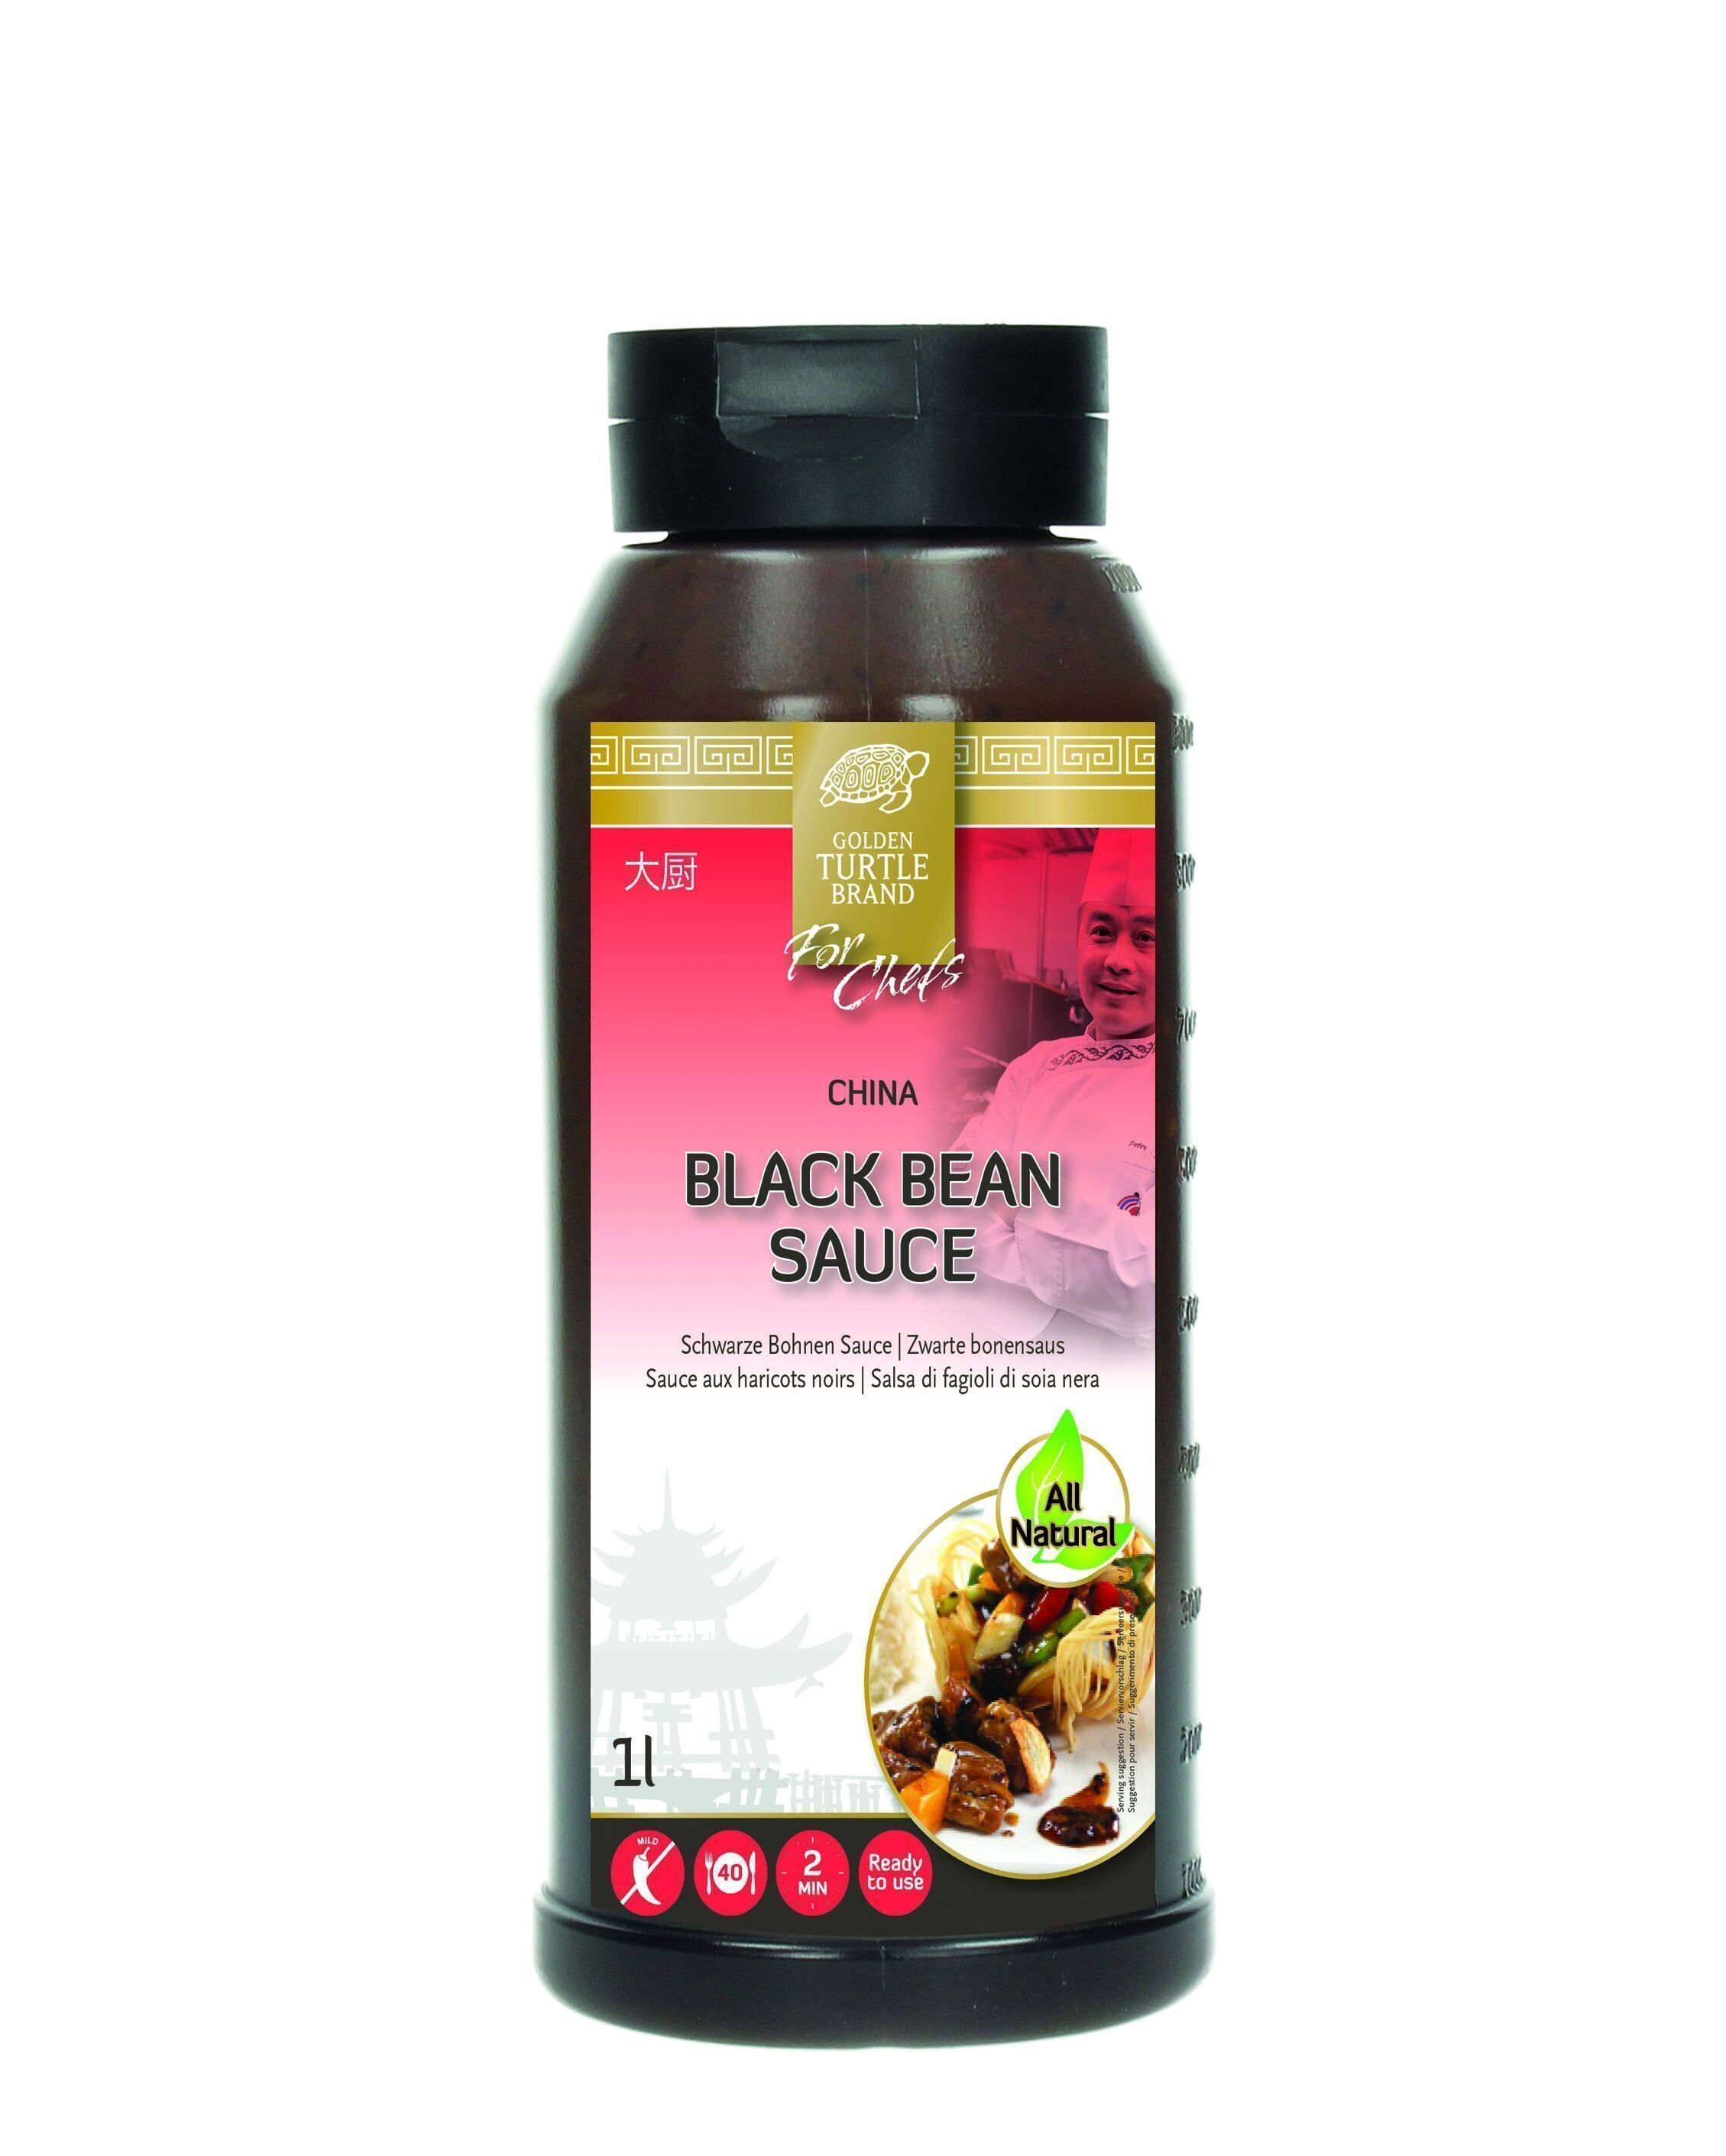 Black Bean Sauce 1L Golden Turtle Brand